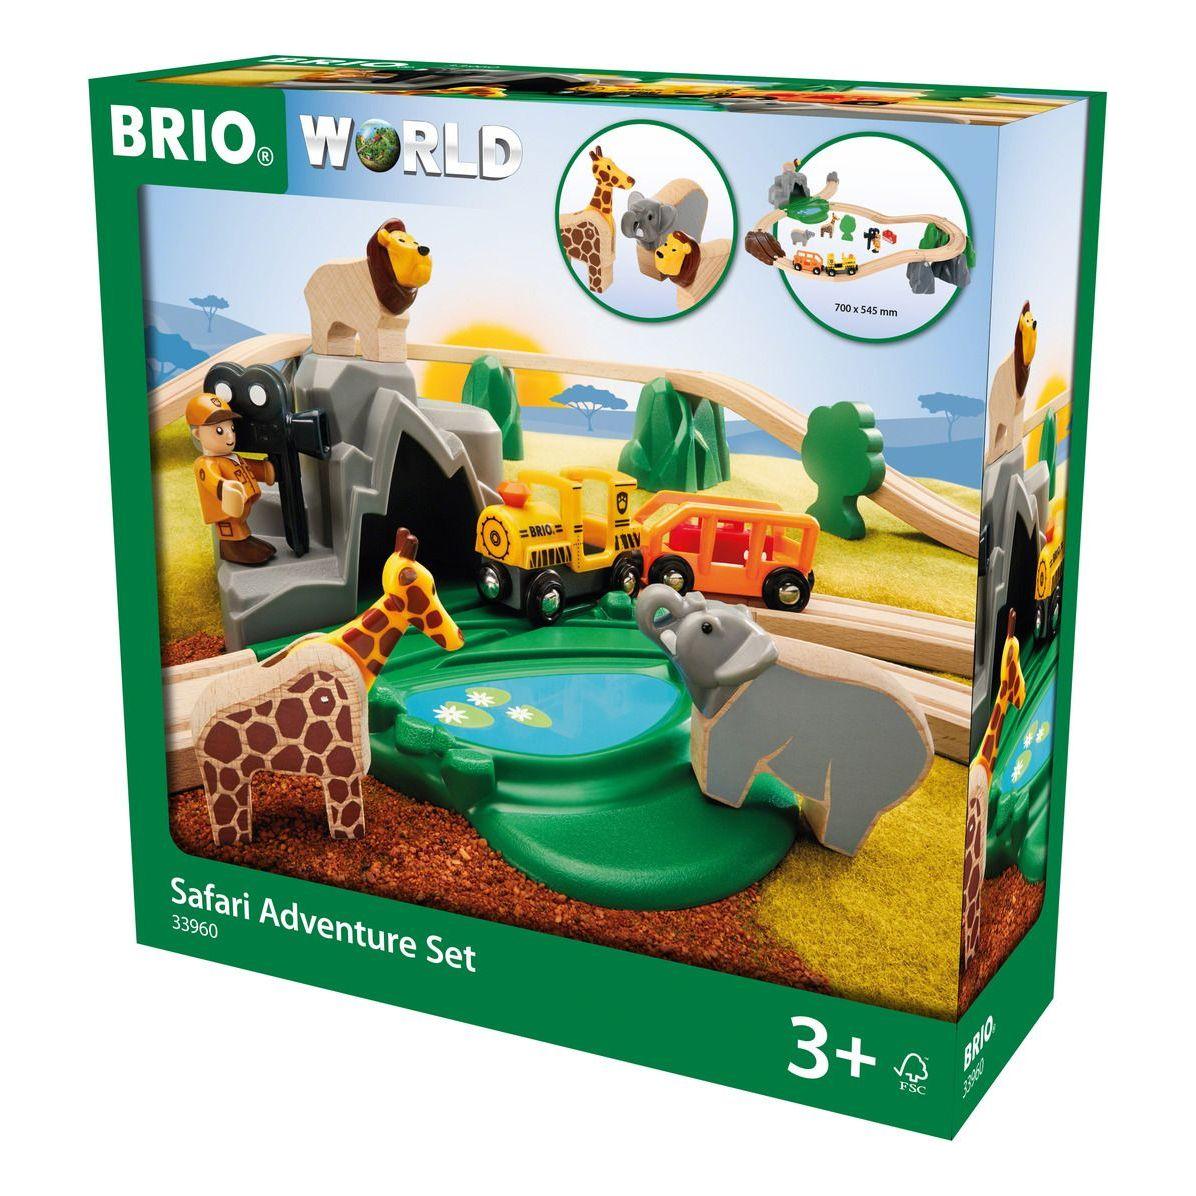 Brio World Safari Adventure Set BRIO